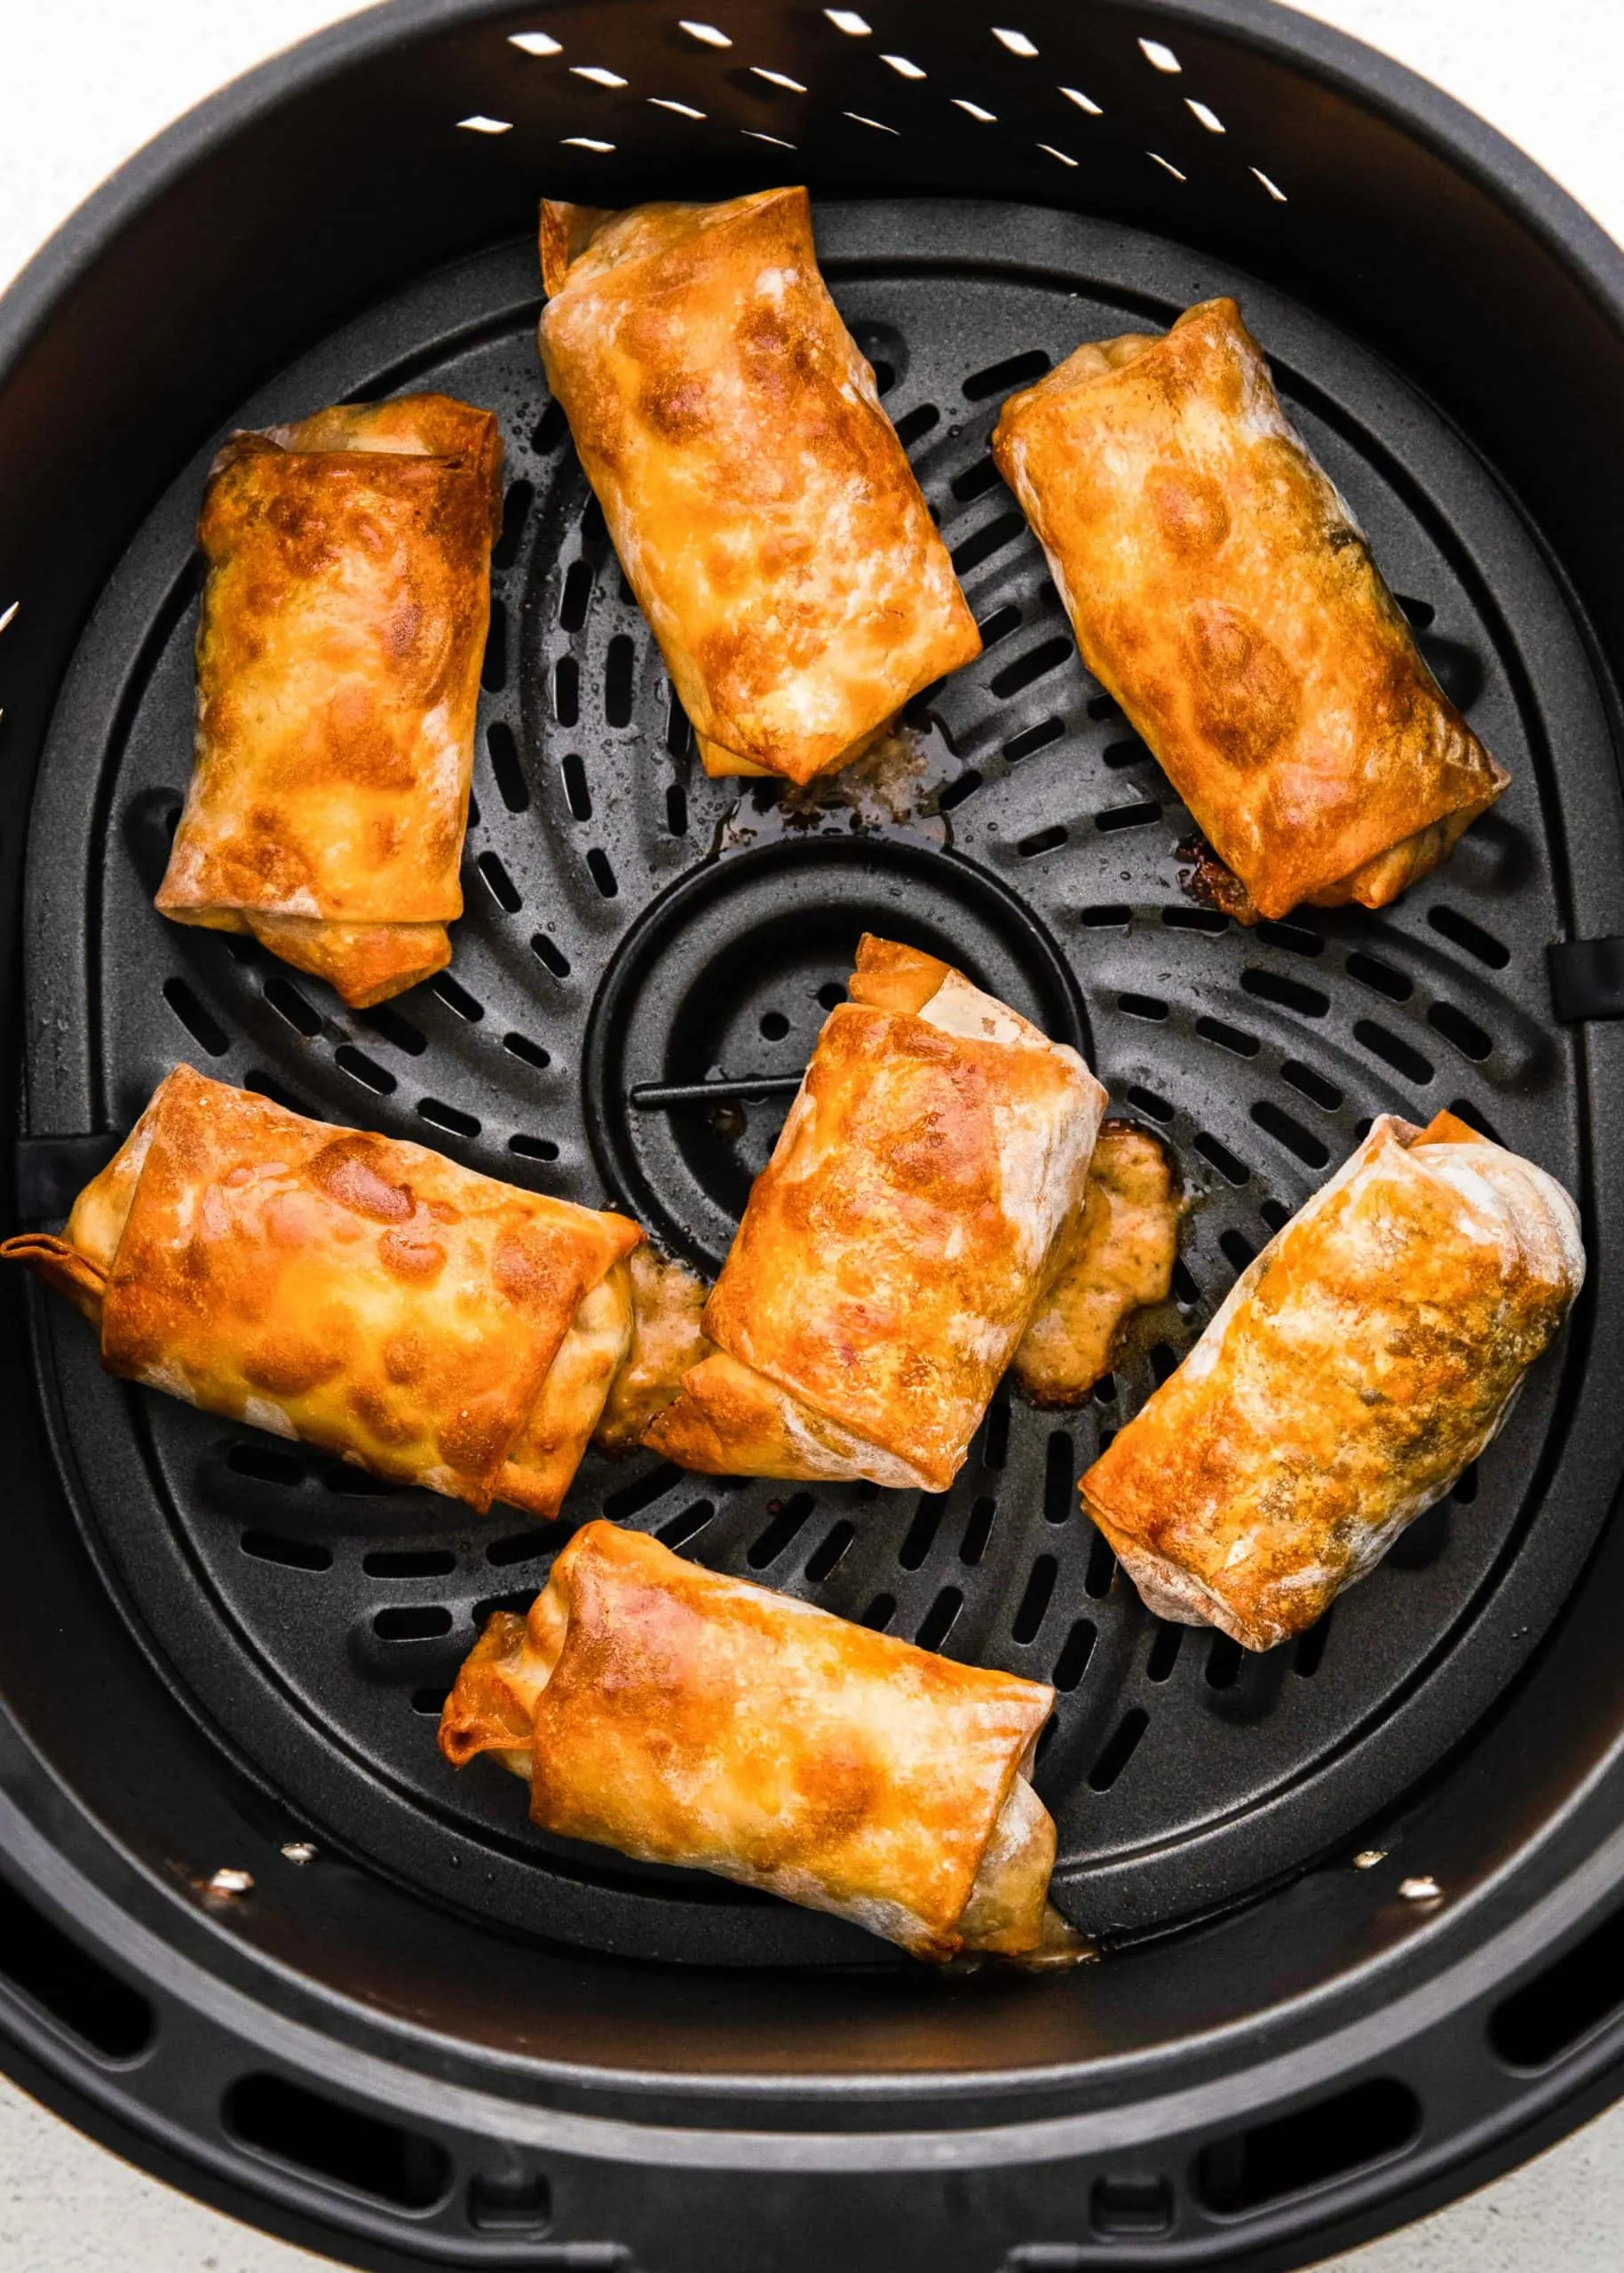 cooked egg rolls in air fryer basket